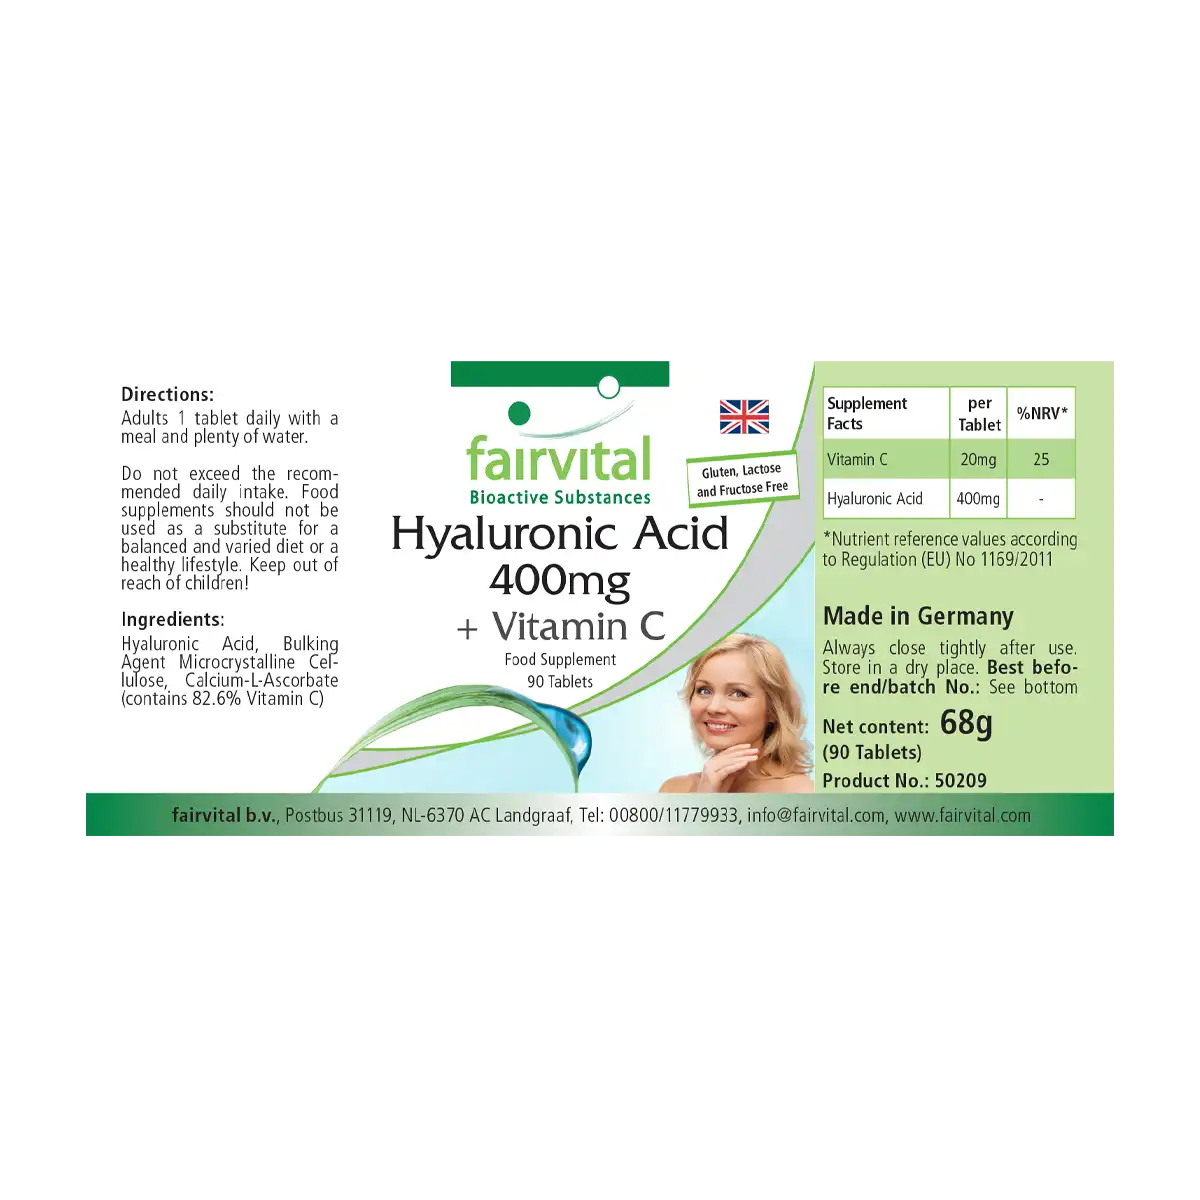 Hyaluronsäure 400mg + Vitamin C